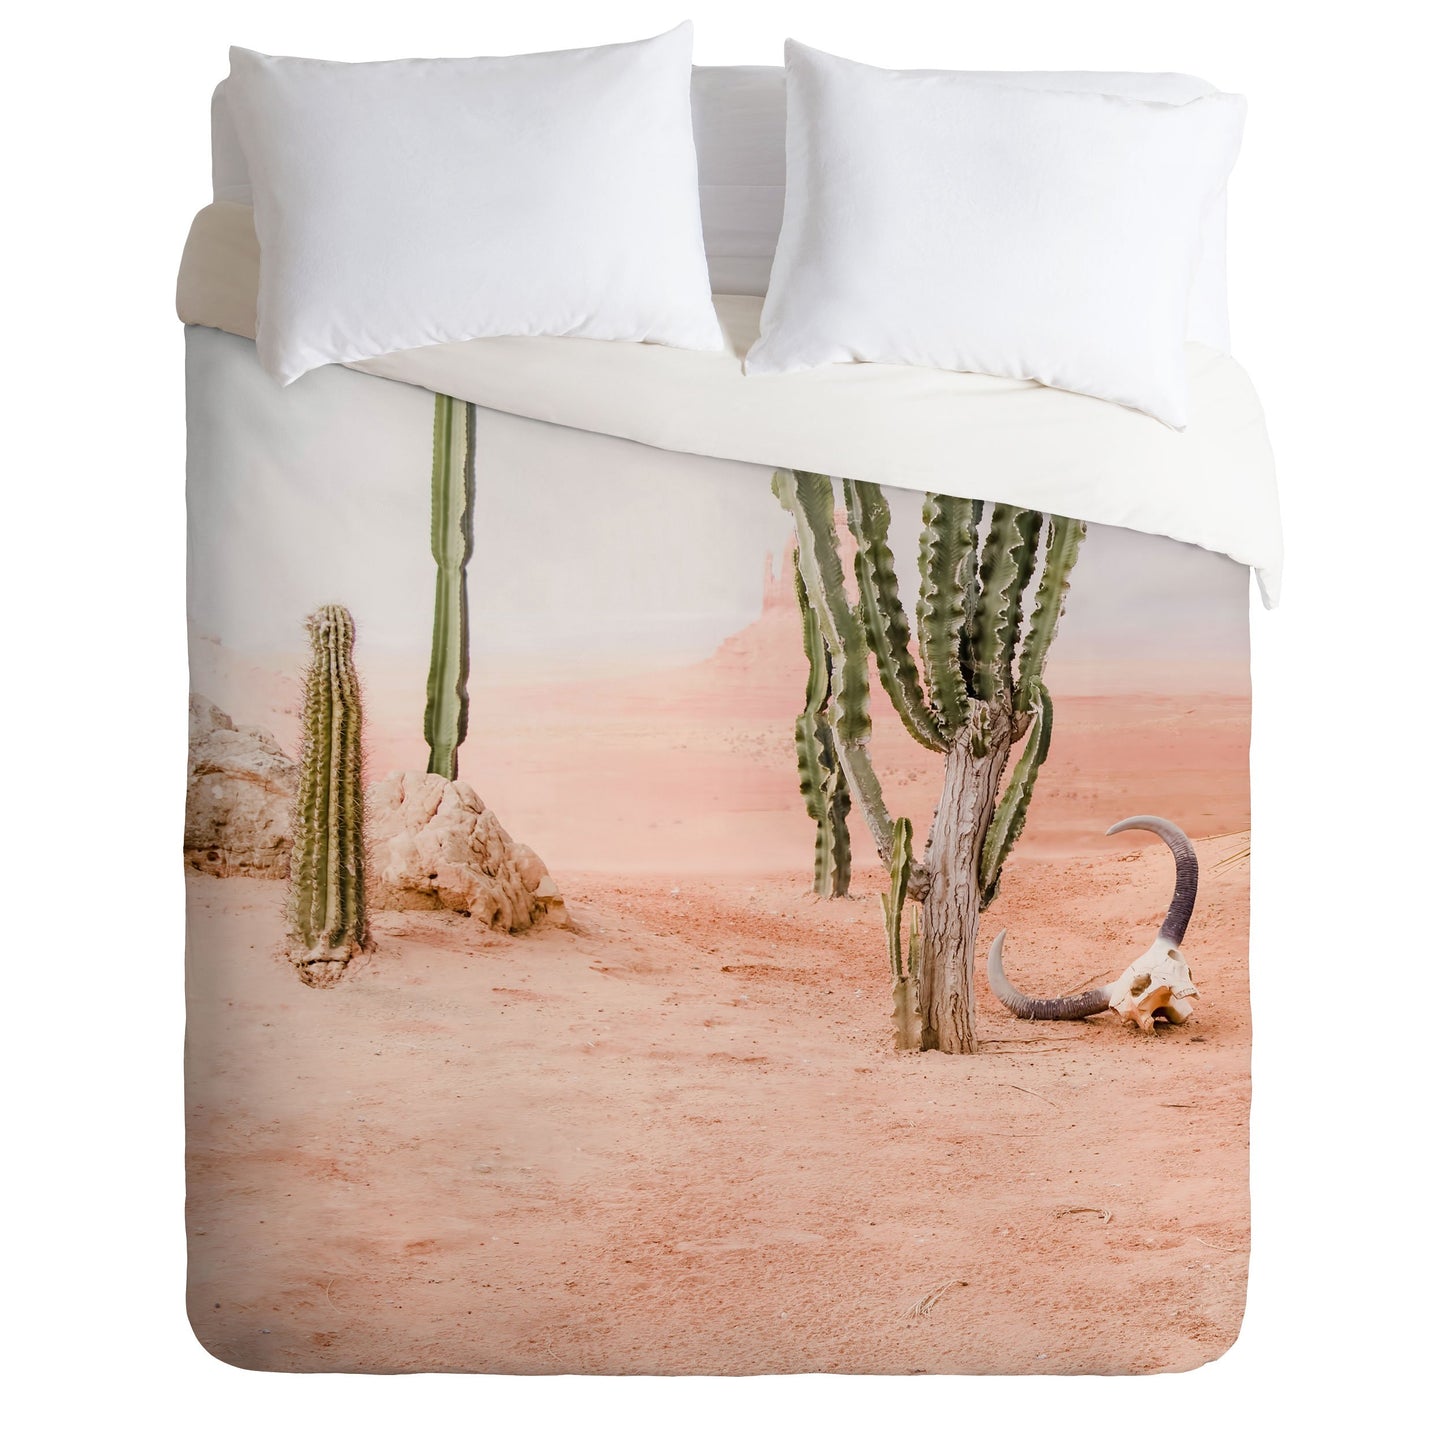 Peach Cactus Duvet Cover - bedding, beddinng, bedspread, blanket, bull skull, cactua, cactus, cactus design, cactus print, cactus prints, cactus scene, cactus theme, comforter, cover, desert, desert cactus, desert graphic, desert print, desert scene, desertprint, desrt, duvet, duvet cover, peach cactus, peach cactus duvet, southwestern, western, westernbedding -  - Baha Ranch Western Wear